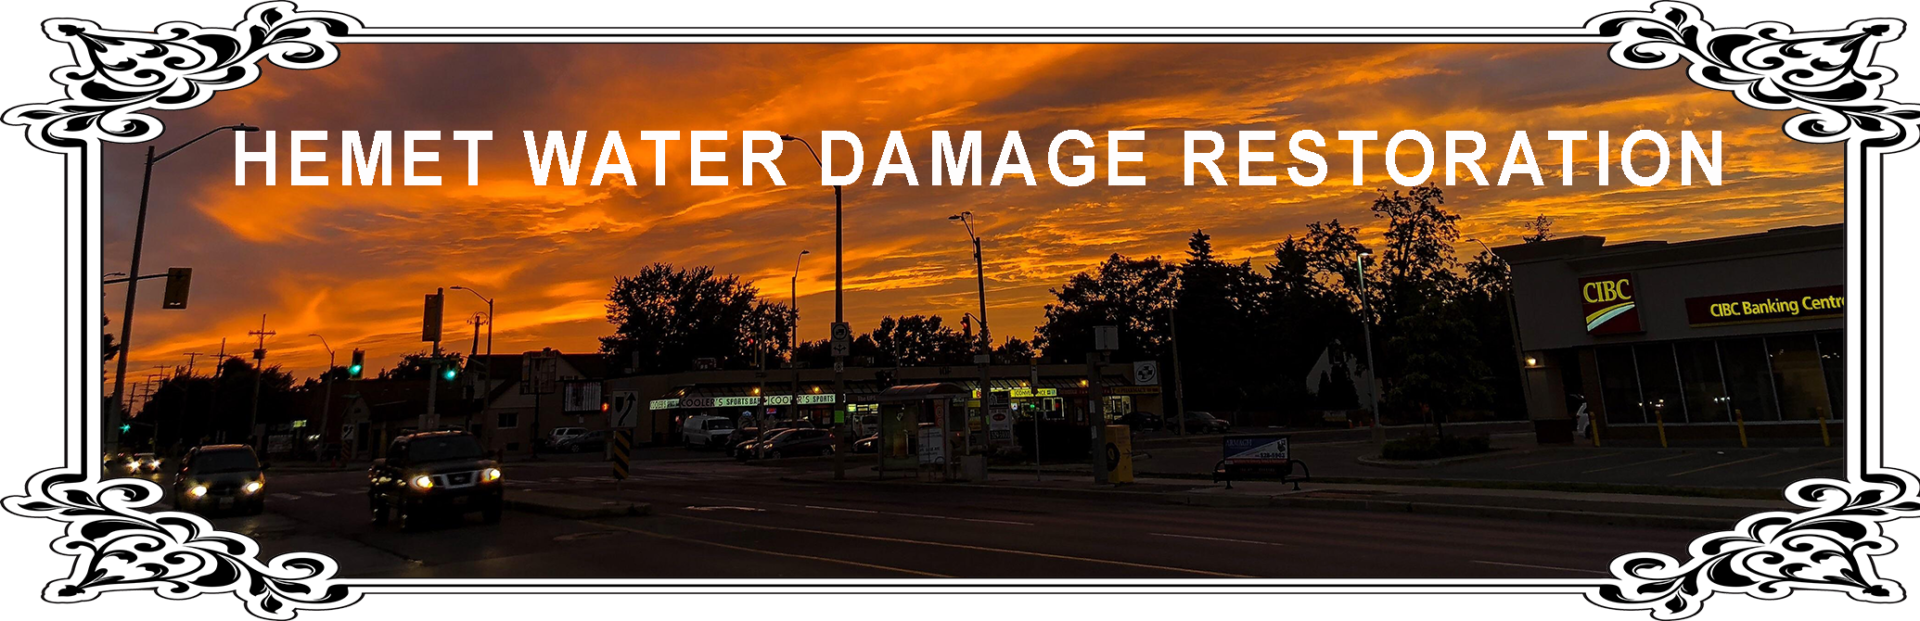 Hemet water damage restoration - Hemet fire damage restoration